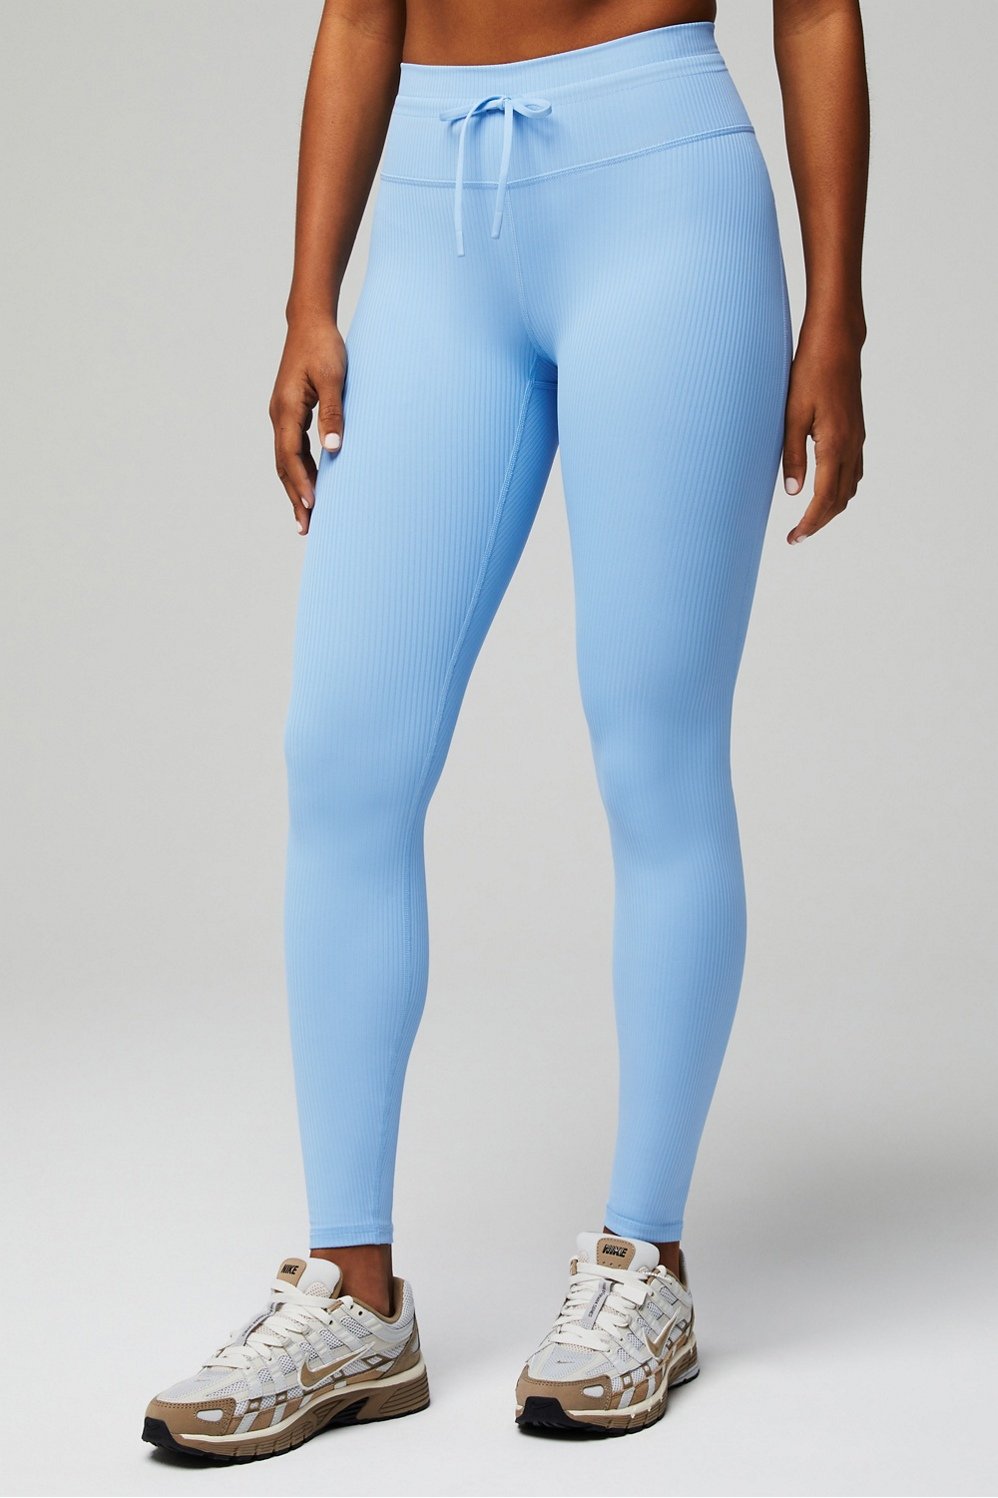 FANTASYSKINS Women's Faux Demin Jegging High Waist Bodycon Yoga Tights  Pants Short Legging Workout Biker Shorts Fake Jeans(BE,S) Blue at   Women's Clothing store